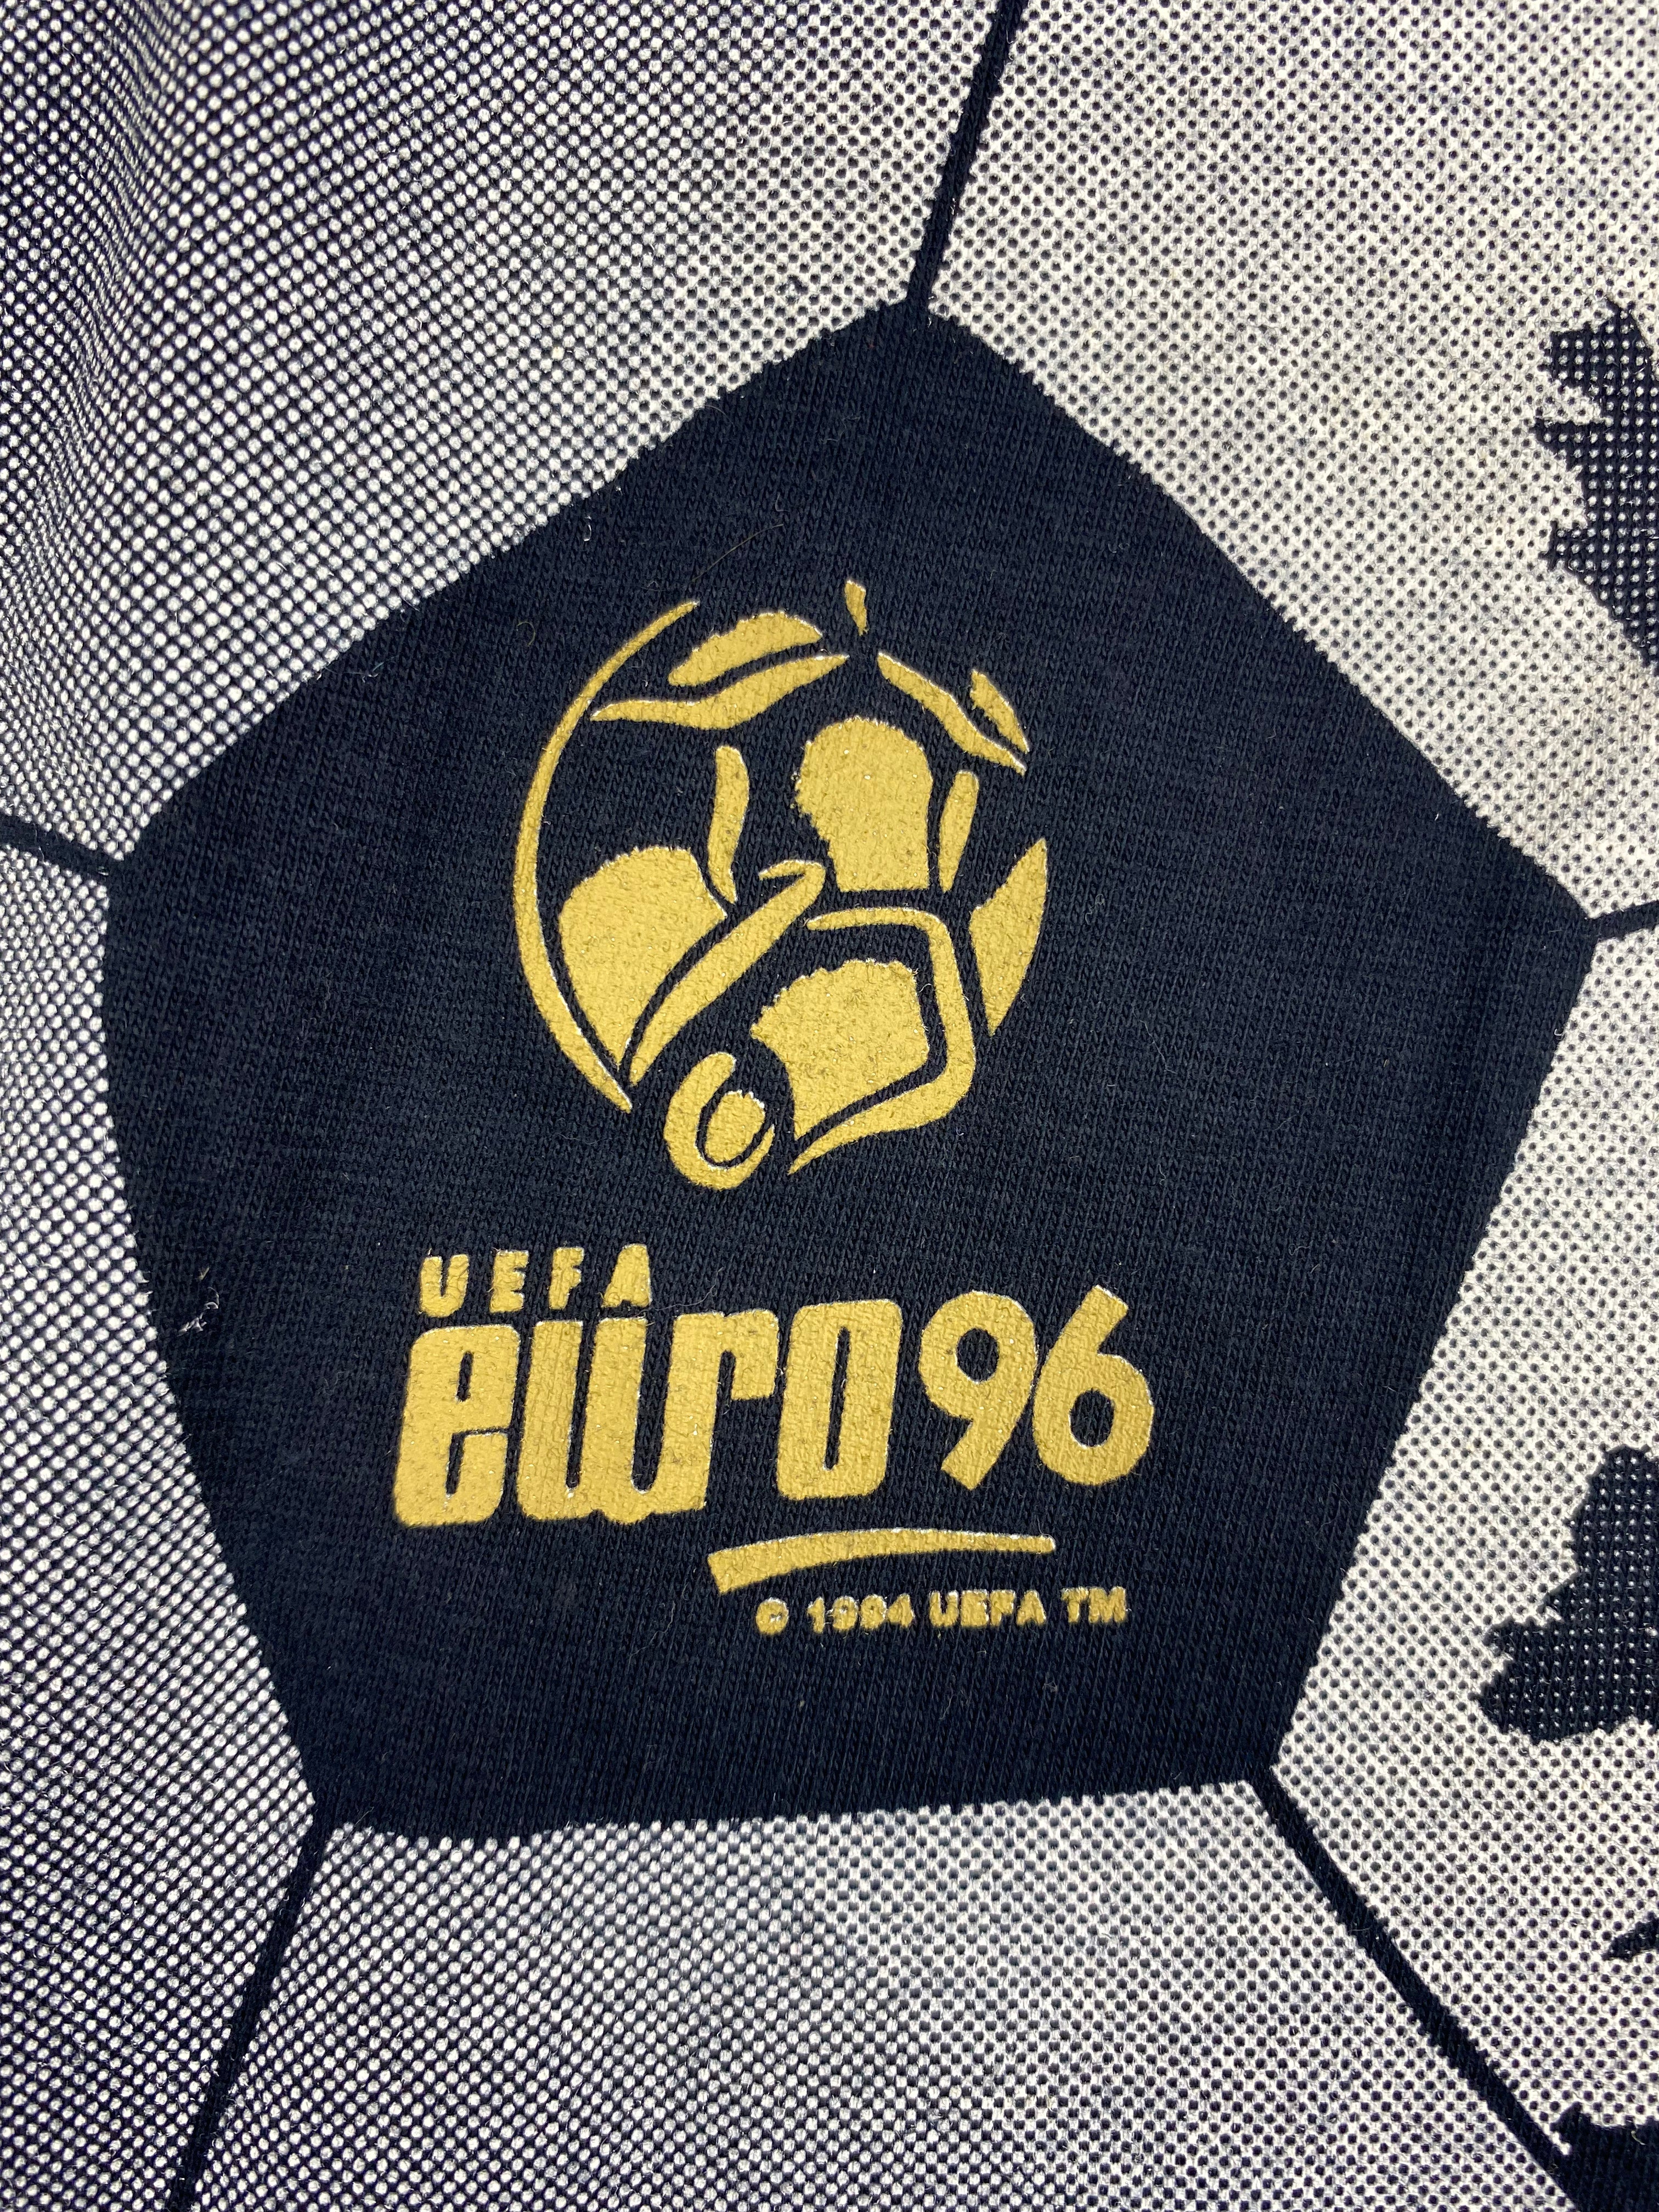 T-shirt UEFA Euro 96 1996 (XL) 9/10